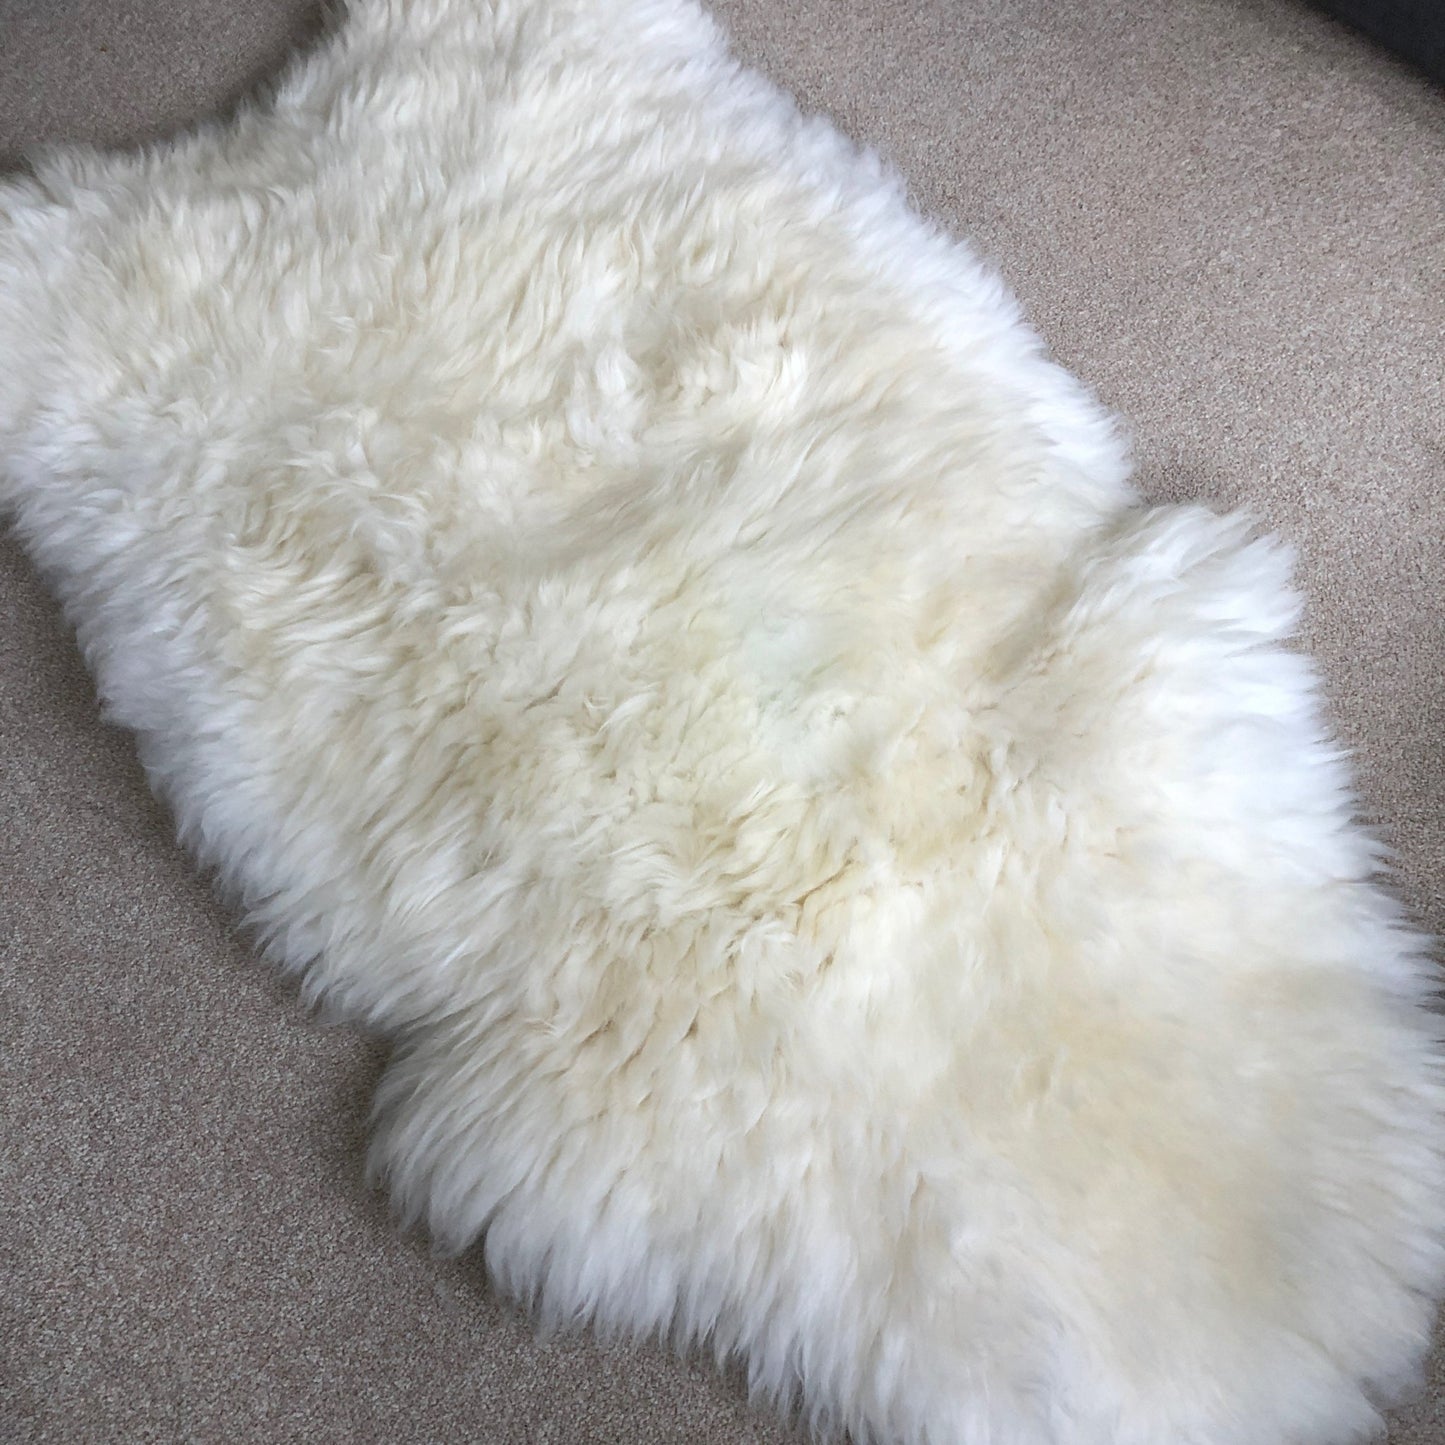 XXL British White Sheepskin Rug 100% Natural Ecofriendly - Wildash London